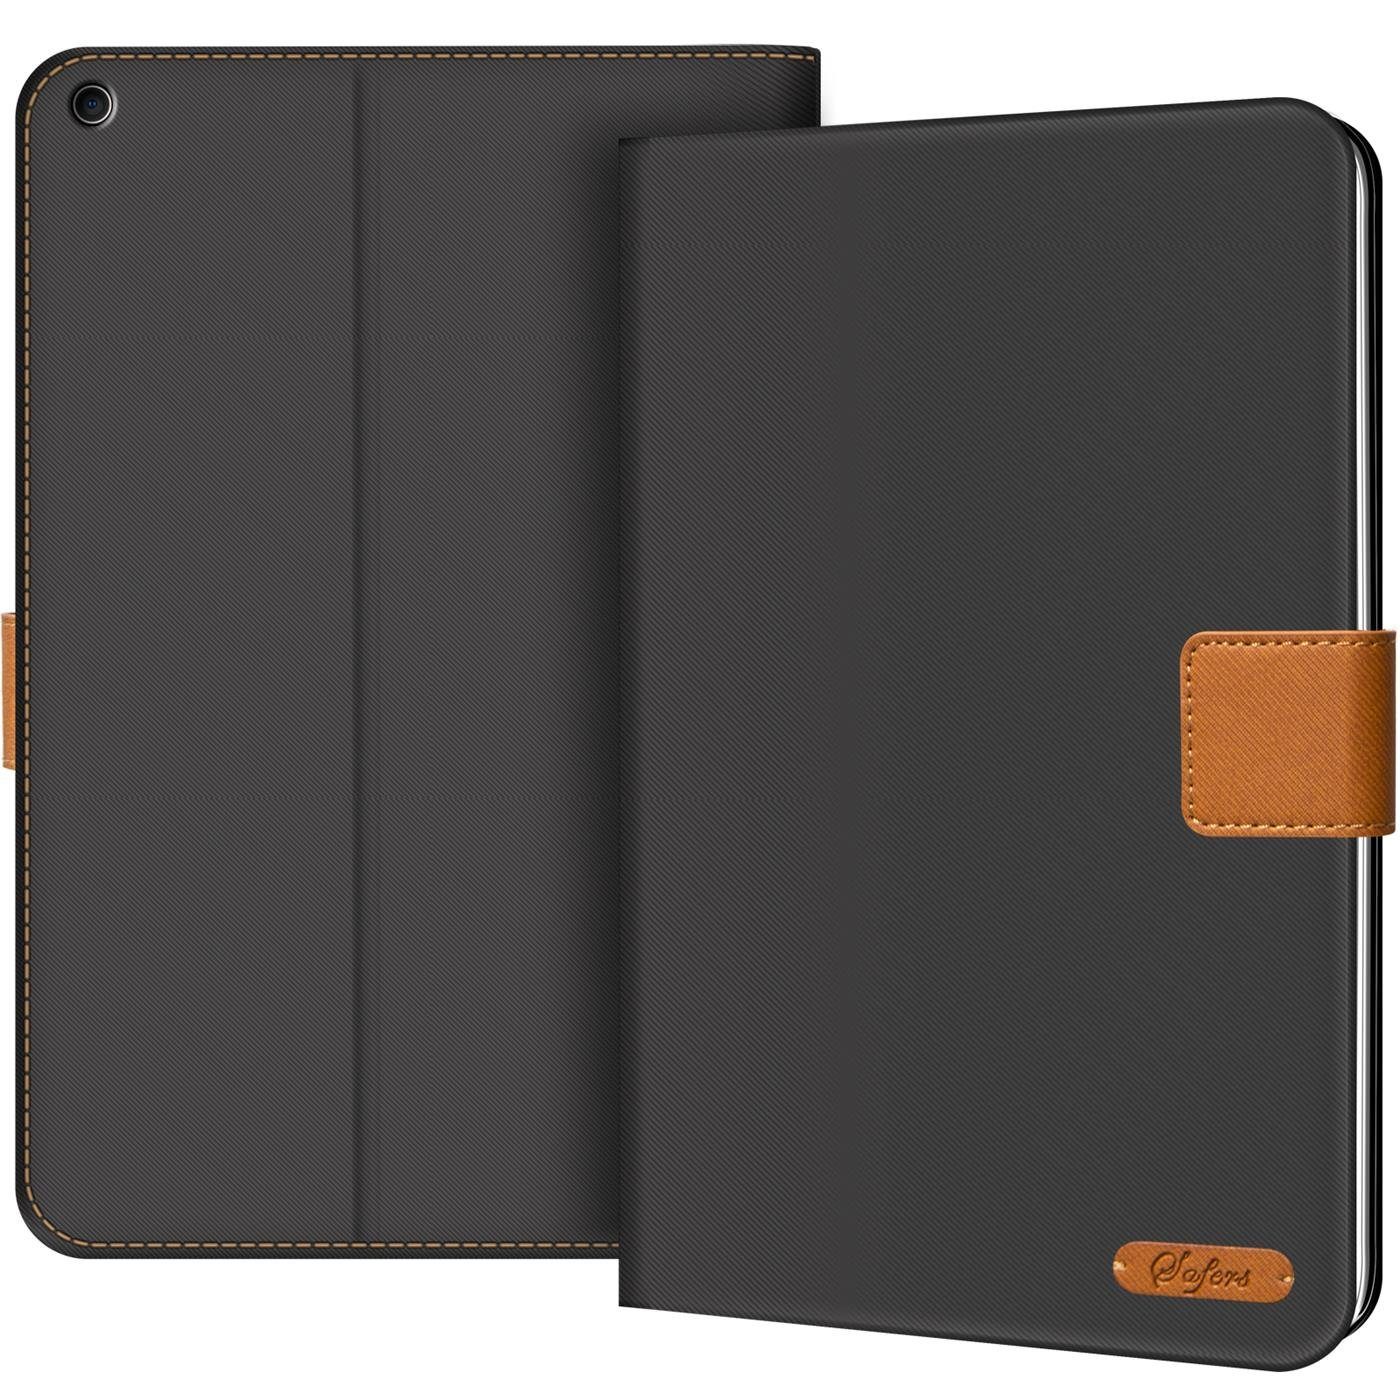 Schwarz iPad Air 3 10.5 Galaxy Tab 10.1 Laptop Hülle Notebook Handtasche Tragetasche Schultergurt FINPAC 11 Zoll Tablet Tasche Schutzhülle für iPad Pro 11 iPad Pro 10.5 iPad 10.2 2019 iPad 9.7 